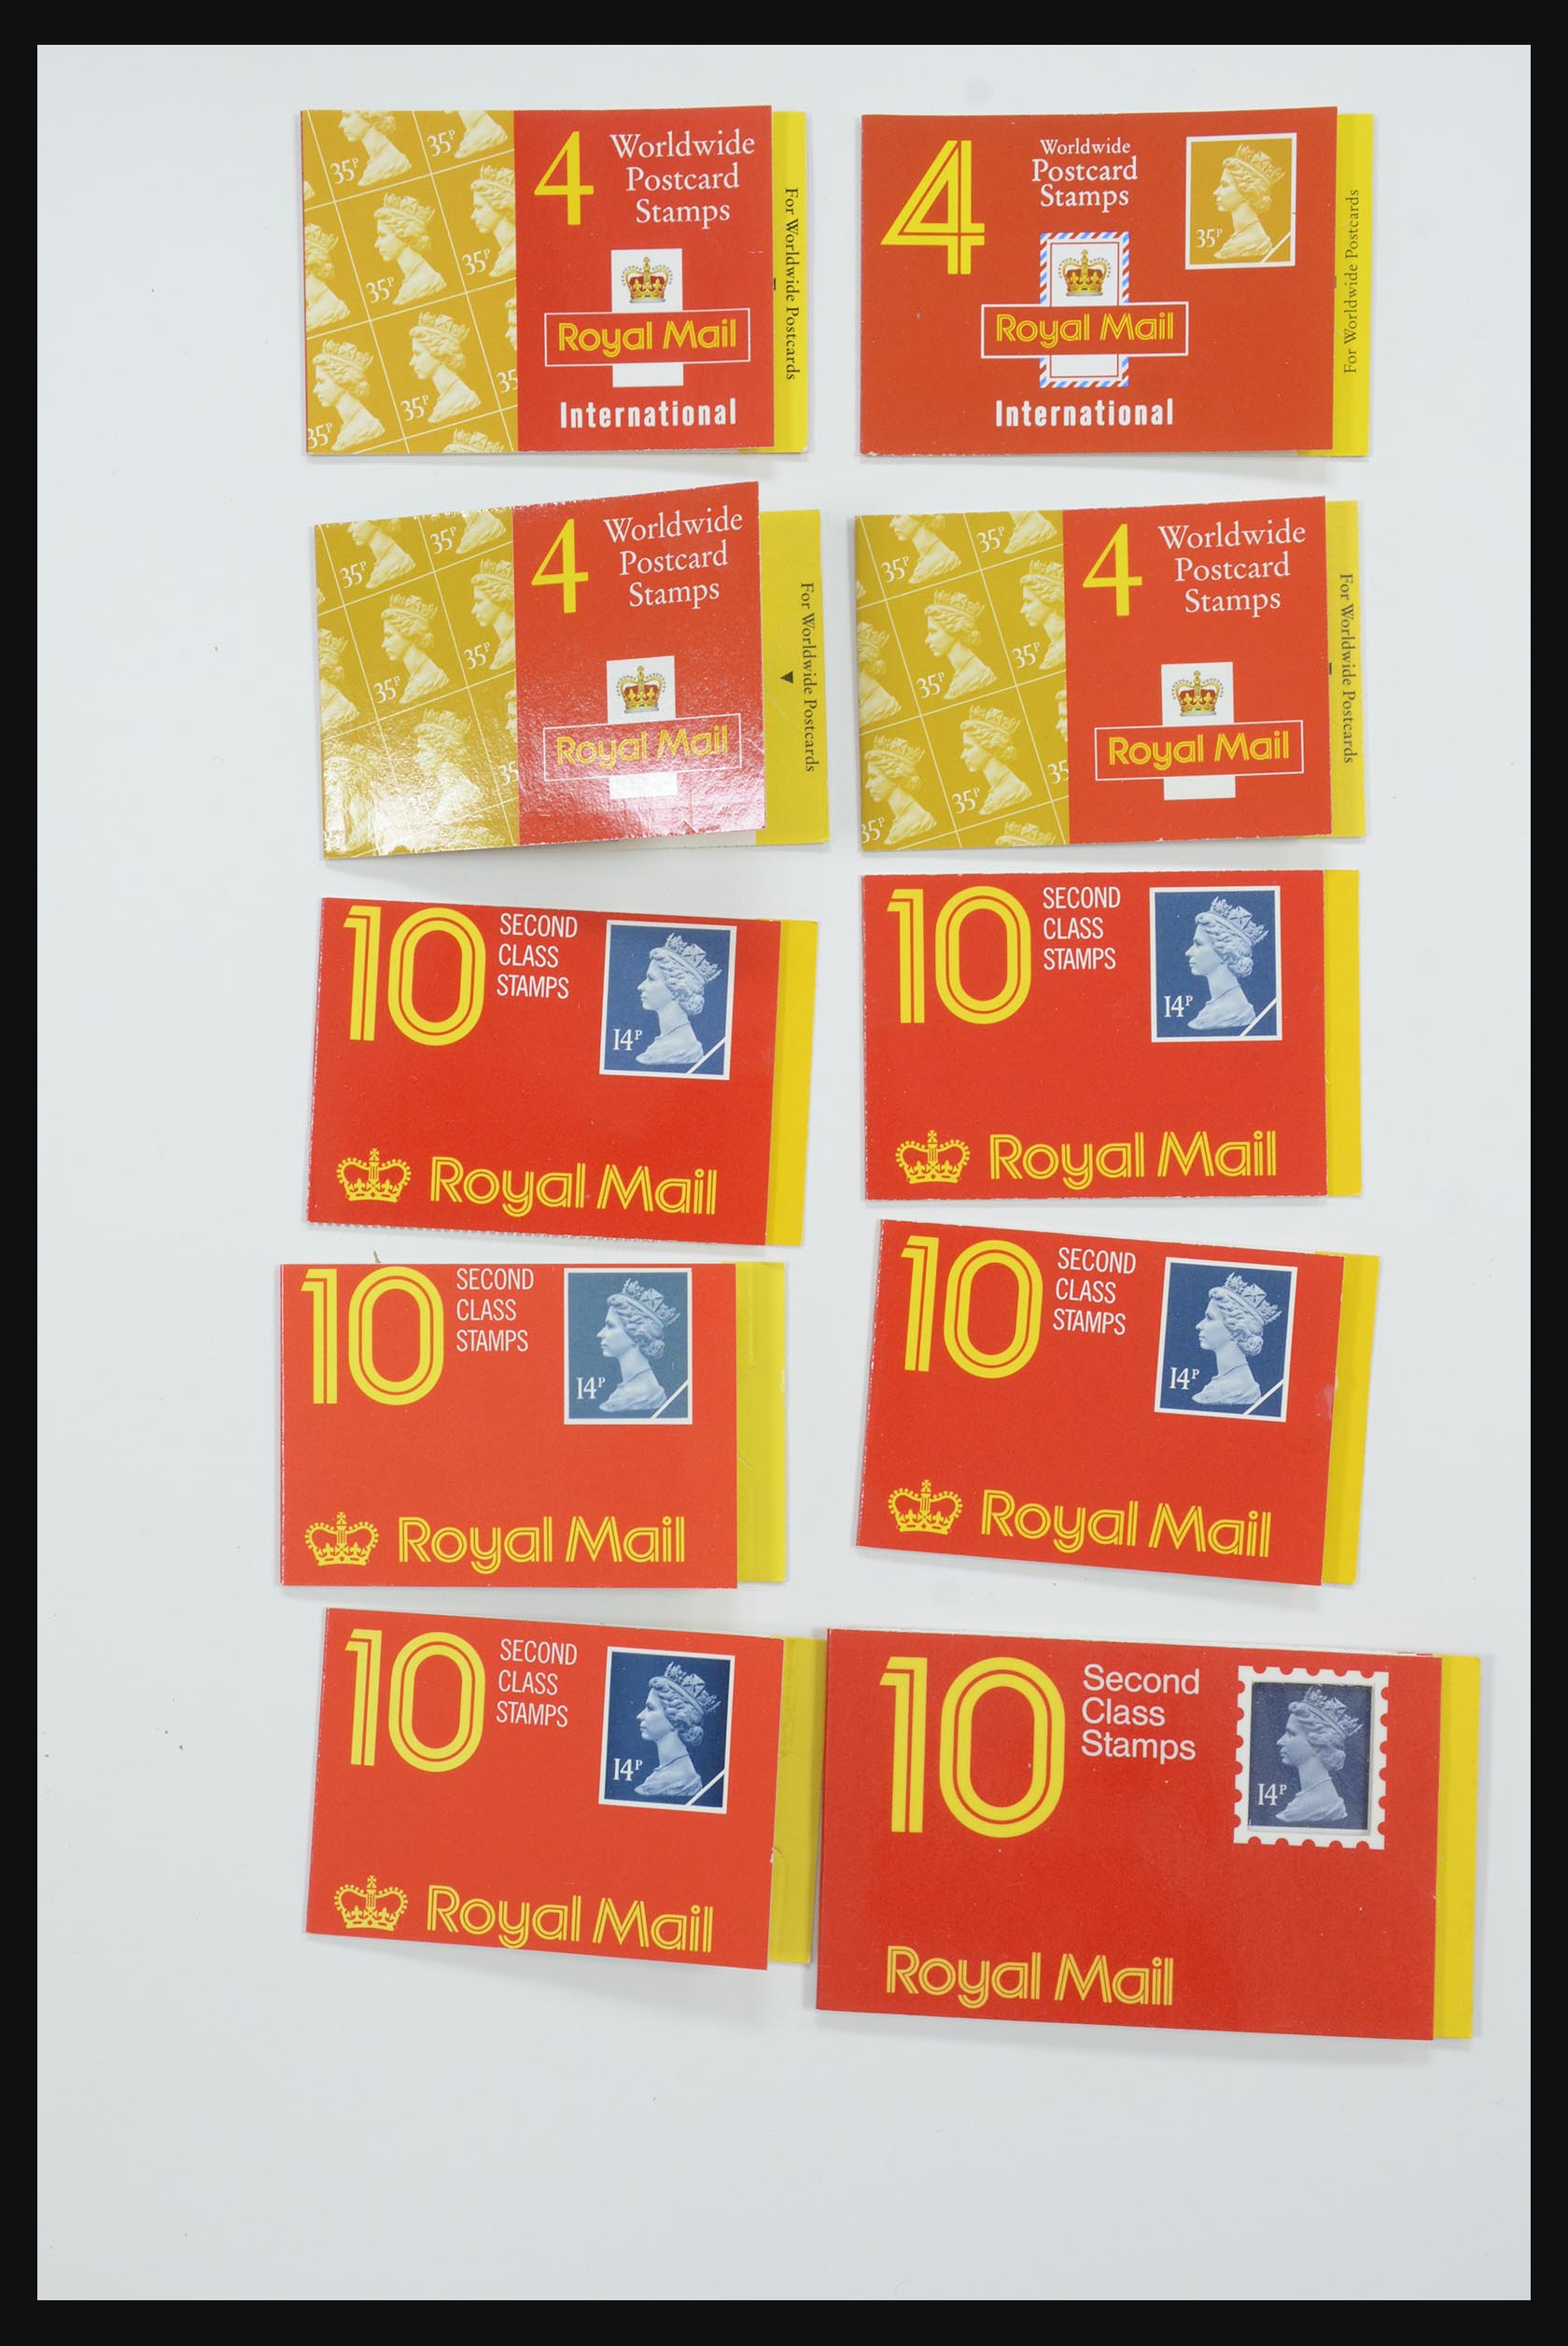 31961 077 - 31961 Great Britain stampbooklets 1971-1999.